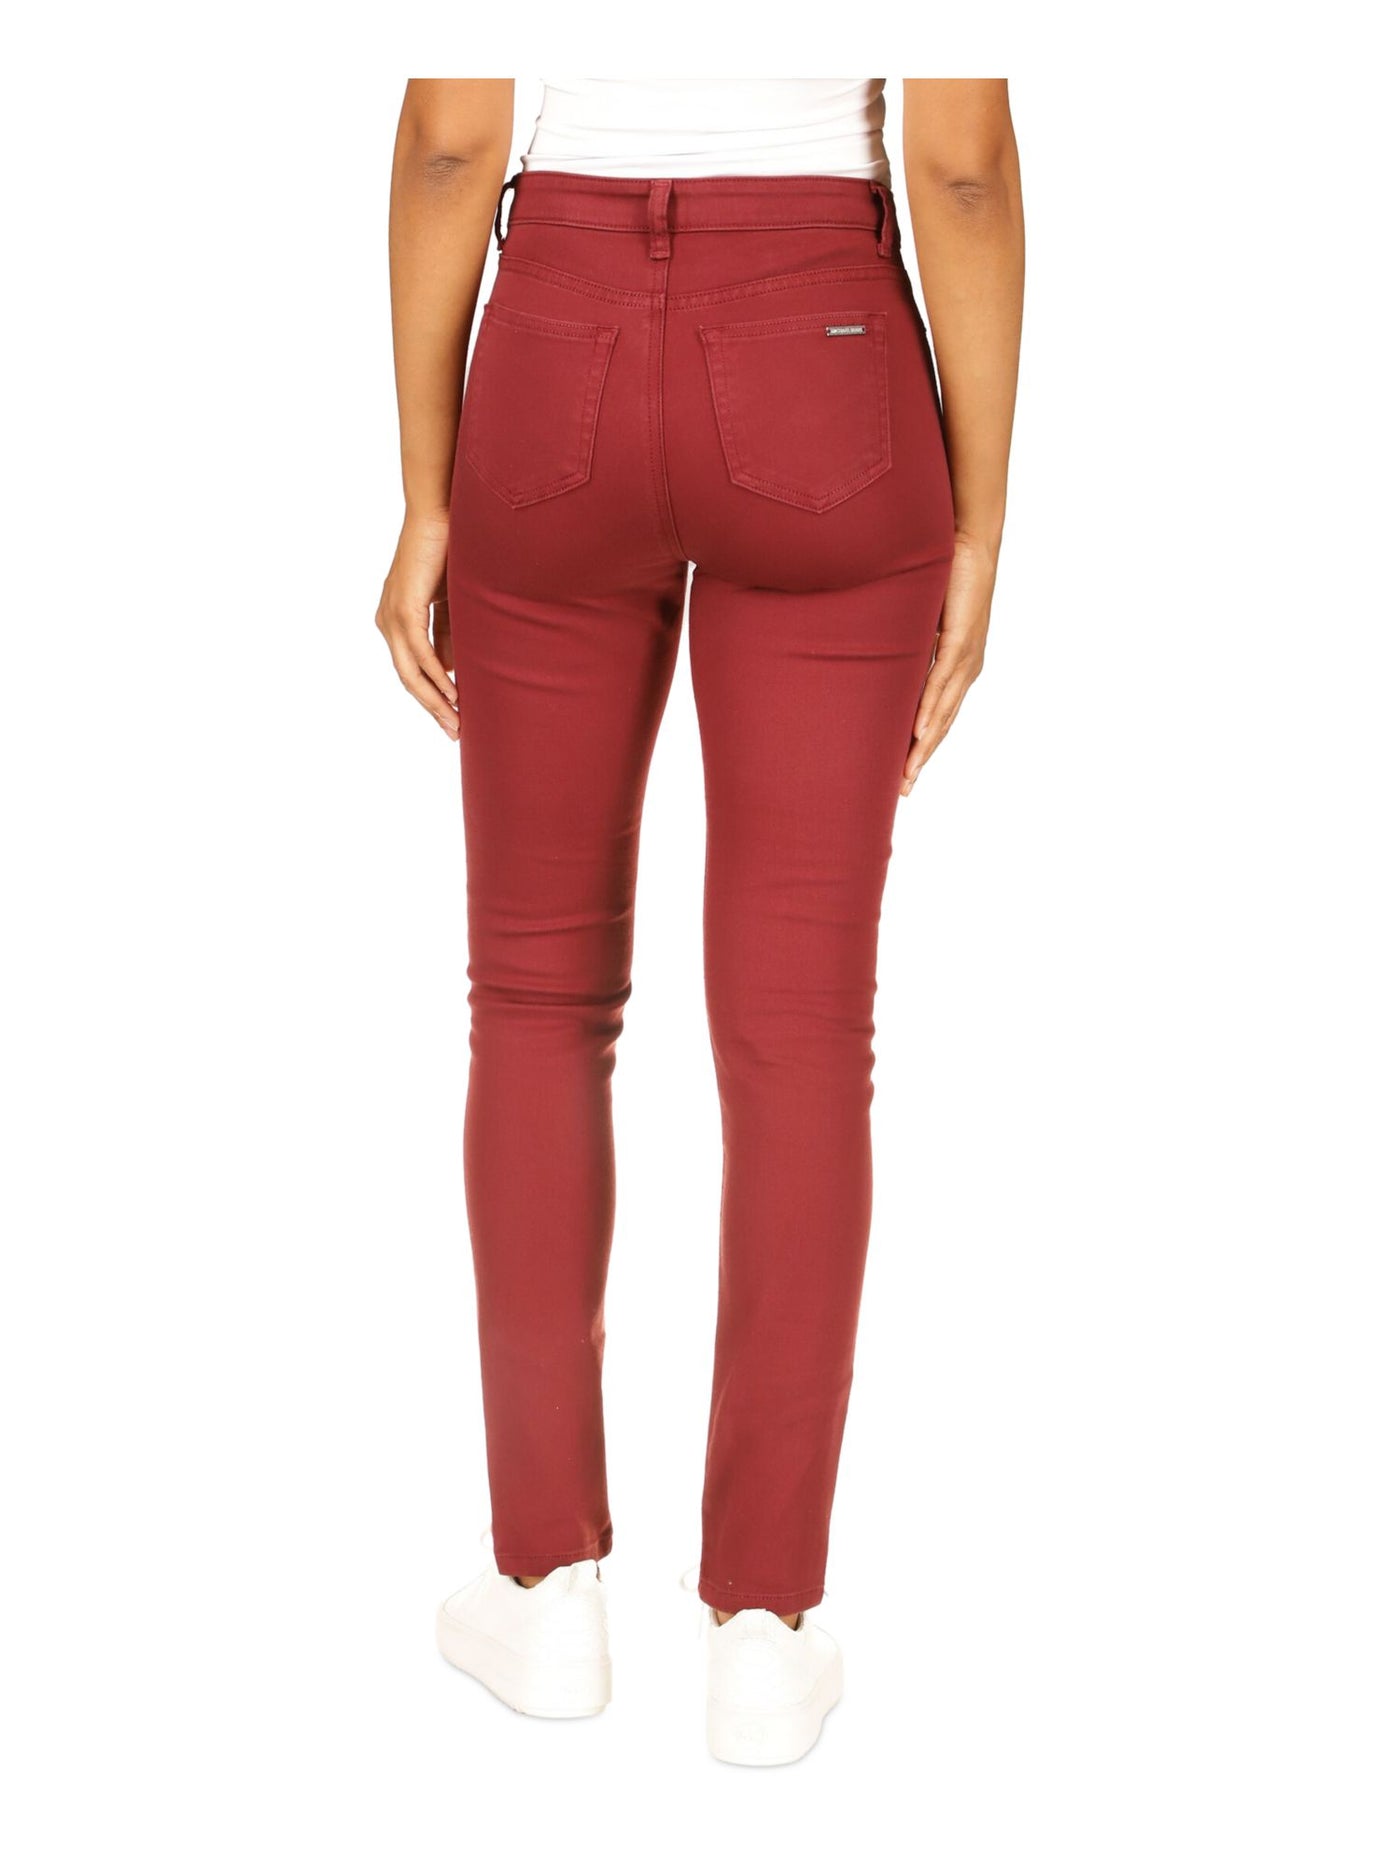 MICHAEL MICHAEL KORS Womens Maroon Zippered Pocketed Skinny High Waist Jeans Petites 10P